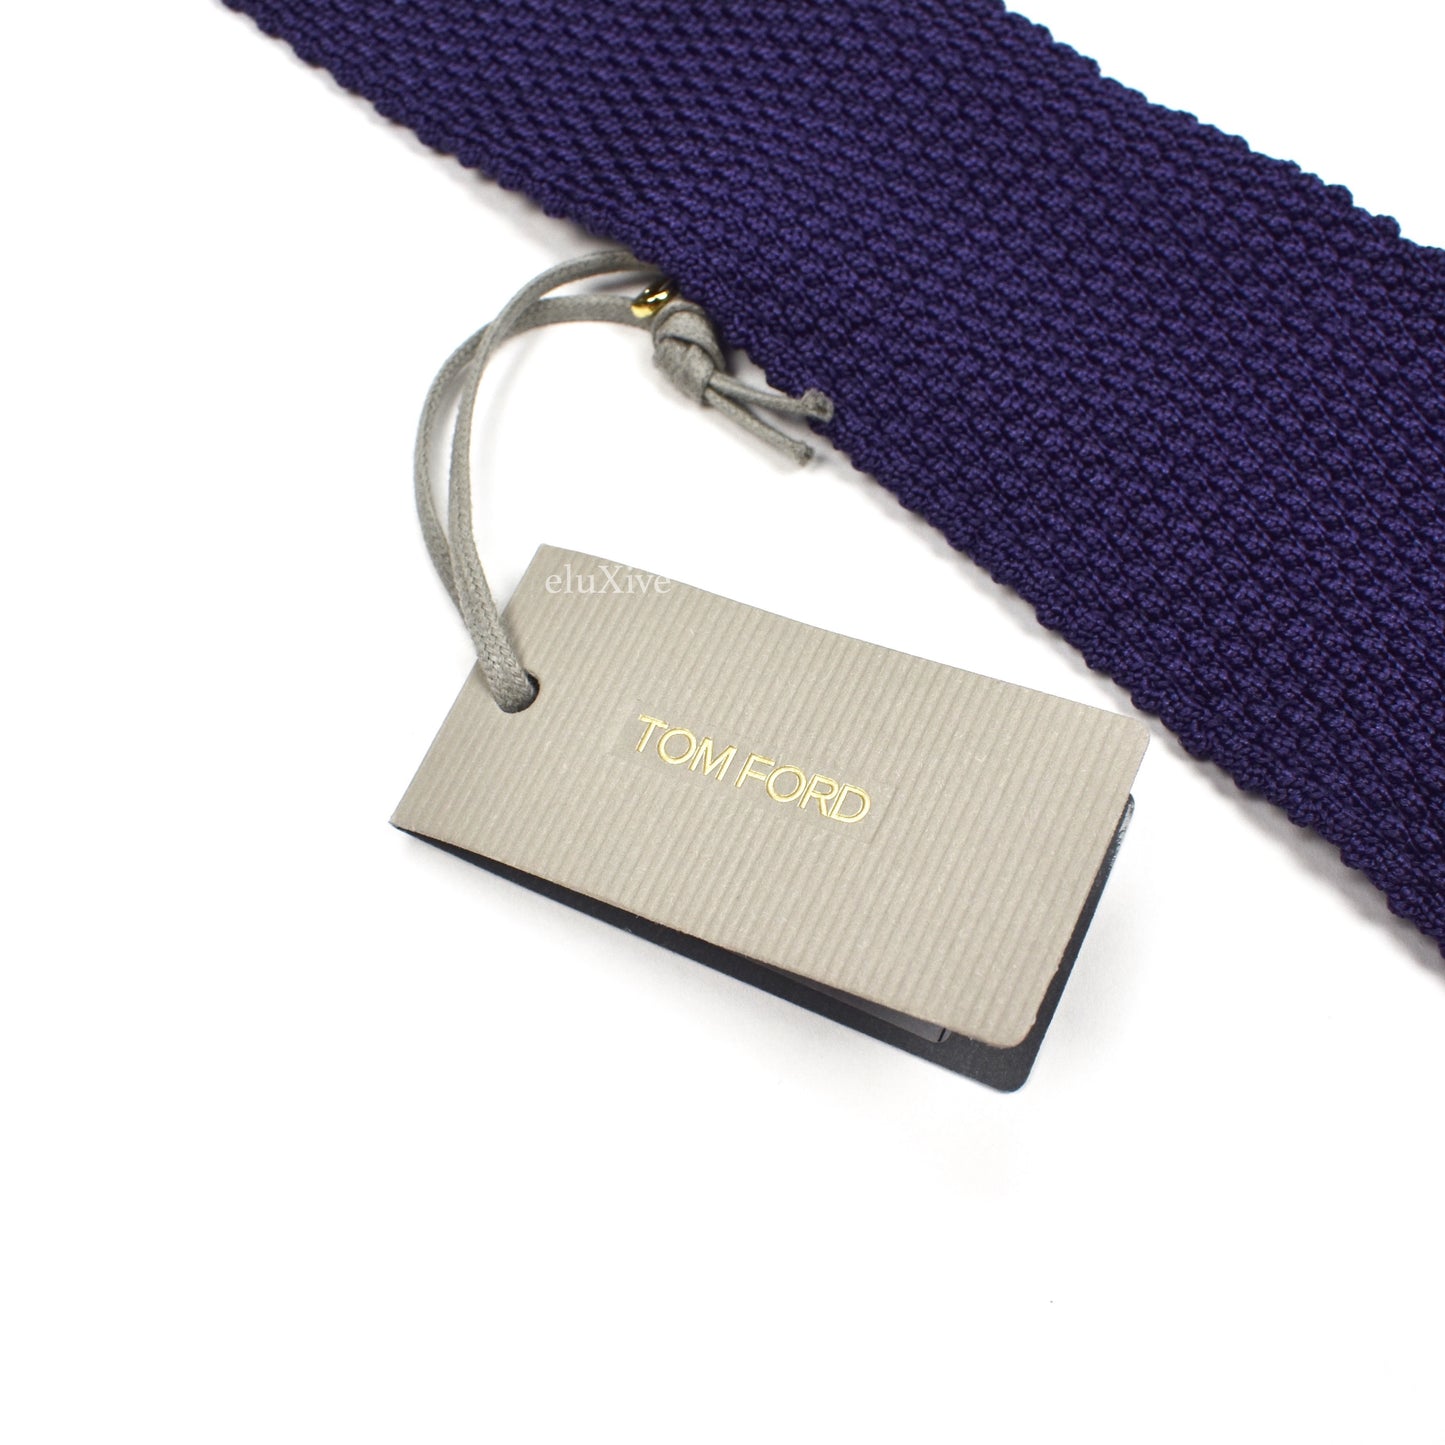 Tom Ford - Dark Purple Silk Knit Tie